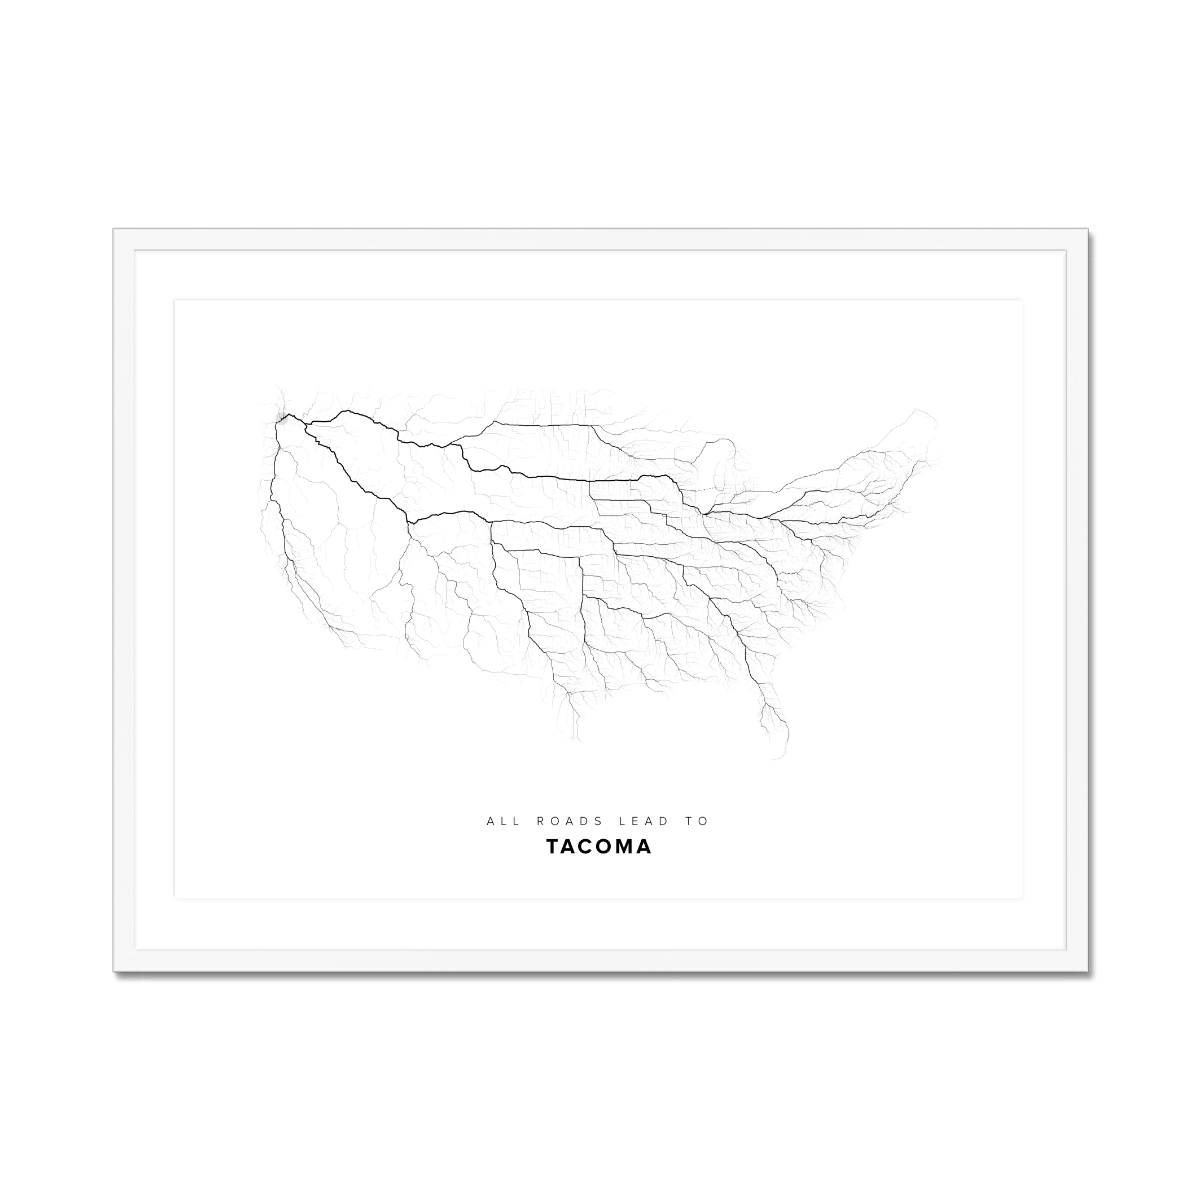 All roads lead to Tacoma (United States of America) Fine Art Map Print